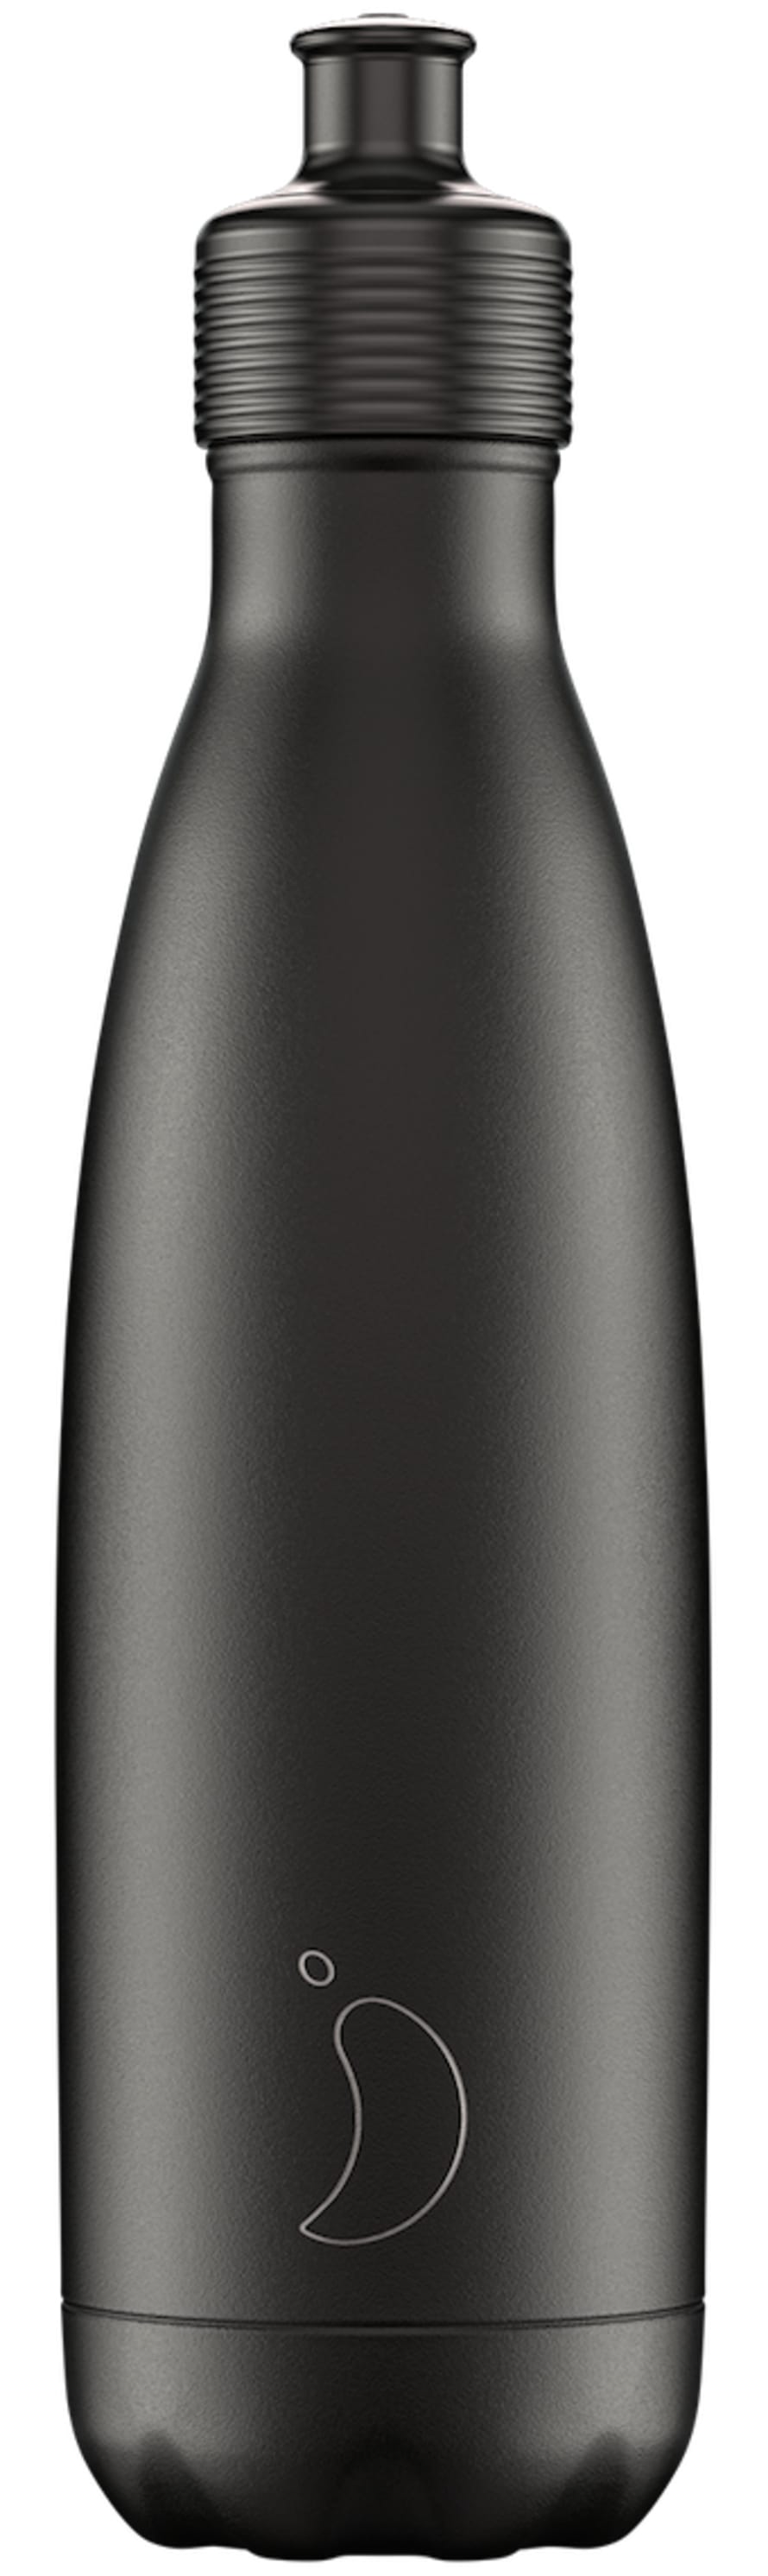 Chilly's 500ml Monochrome Black Sports Bottle